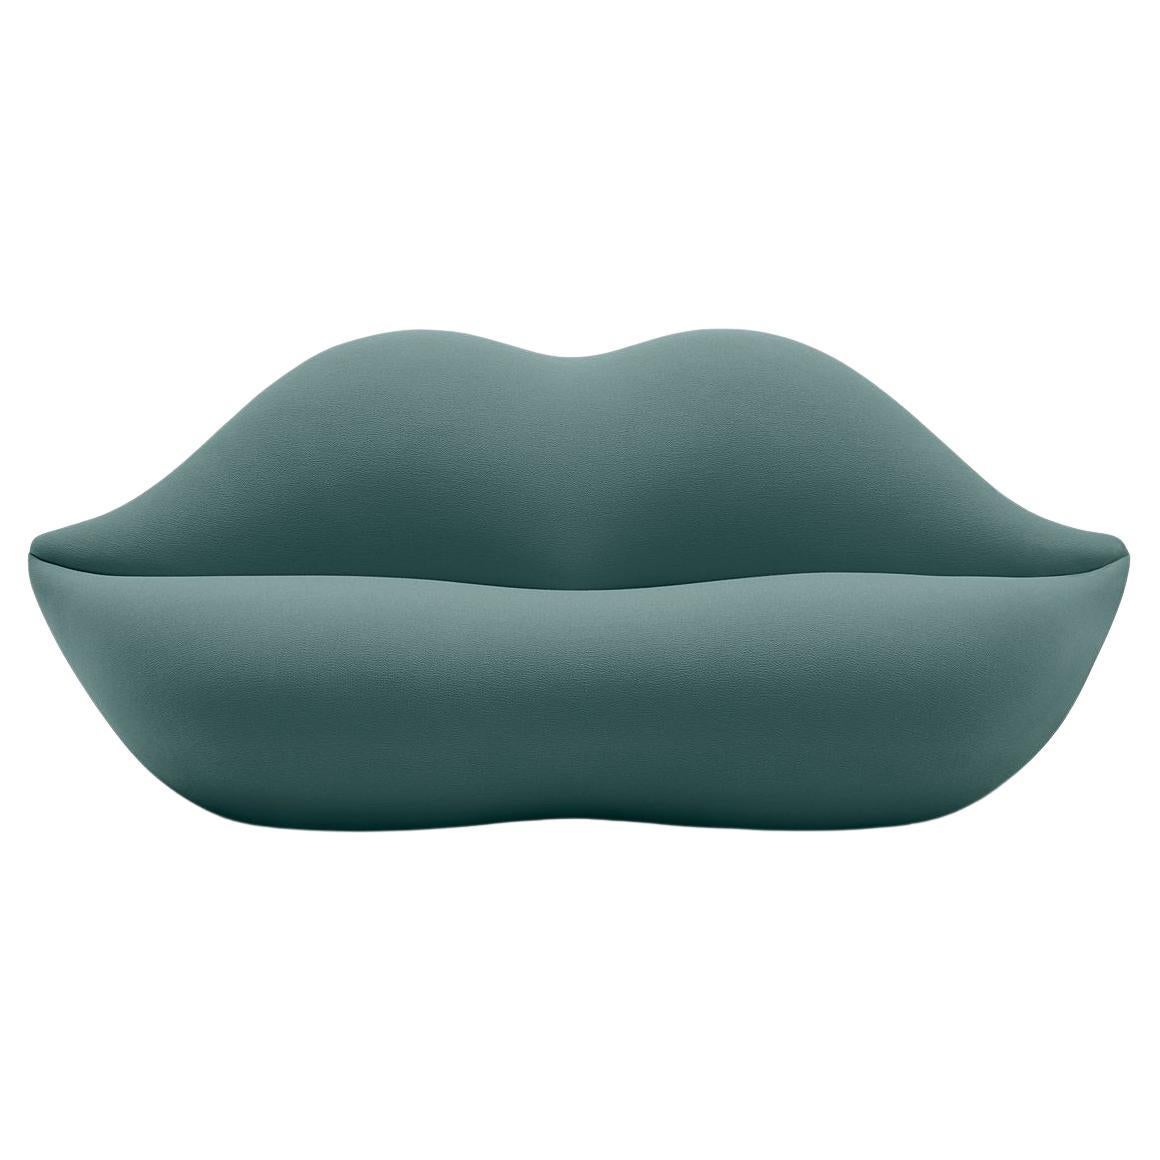 Gufram, Bocca Lip-Shaped Sofa, Artic, by Studio 65 For Sale